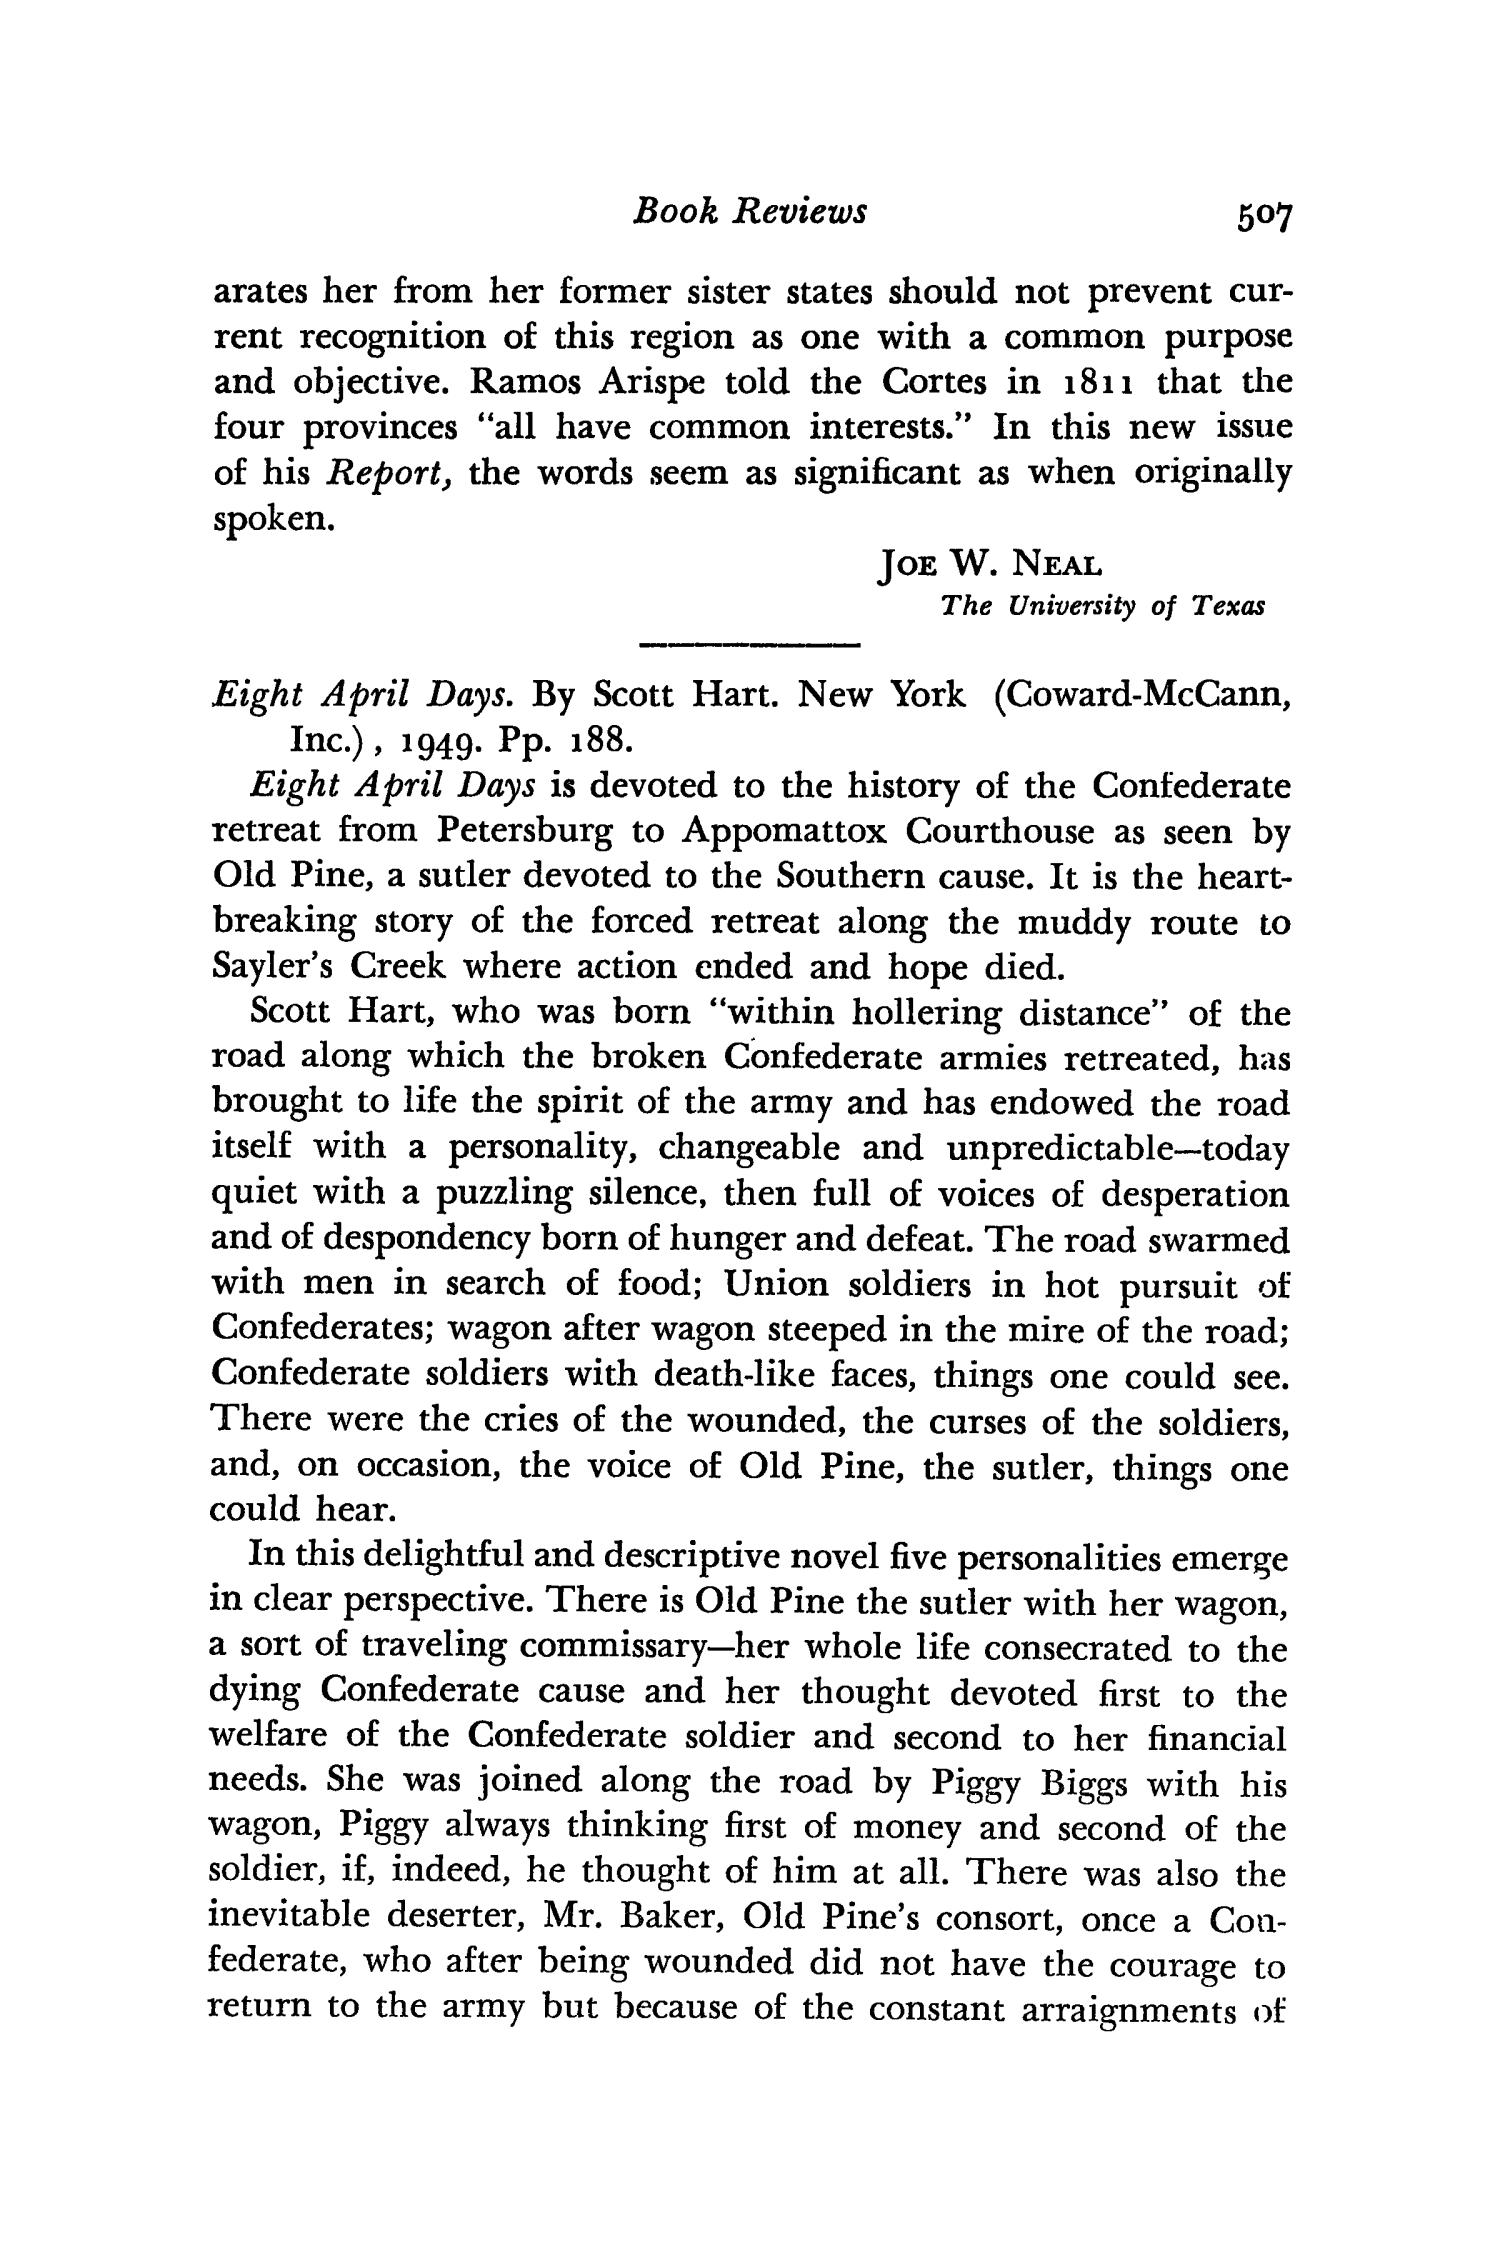 The Southwestern Historical Quarterly, Volume 54, July 1950 - April, 1951
                                                
                                                    507
                                                